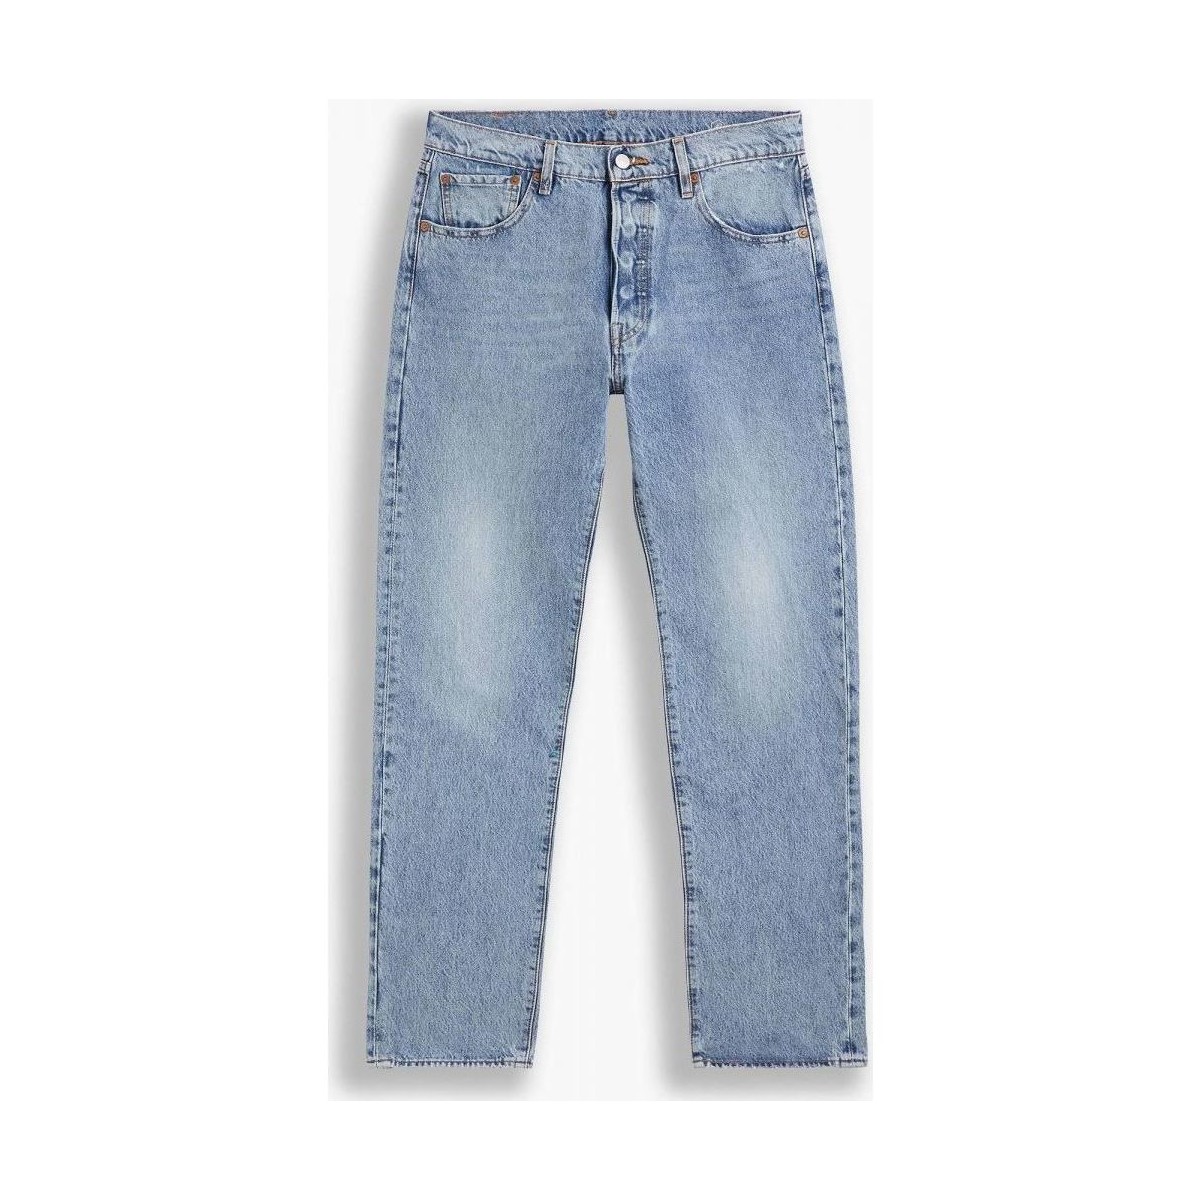 Kleidung Herren Jeans Levi's 59692 0022 - 501 SKATEBOARDING-S&E STF HOMEWOOD Blau